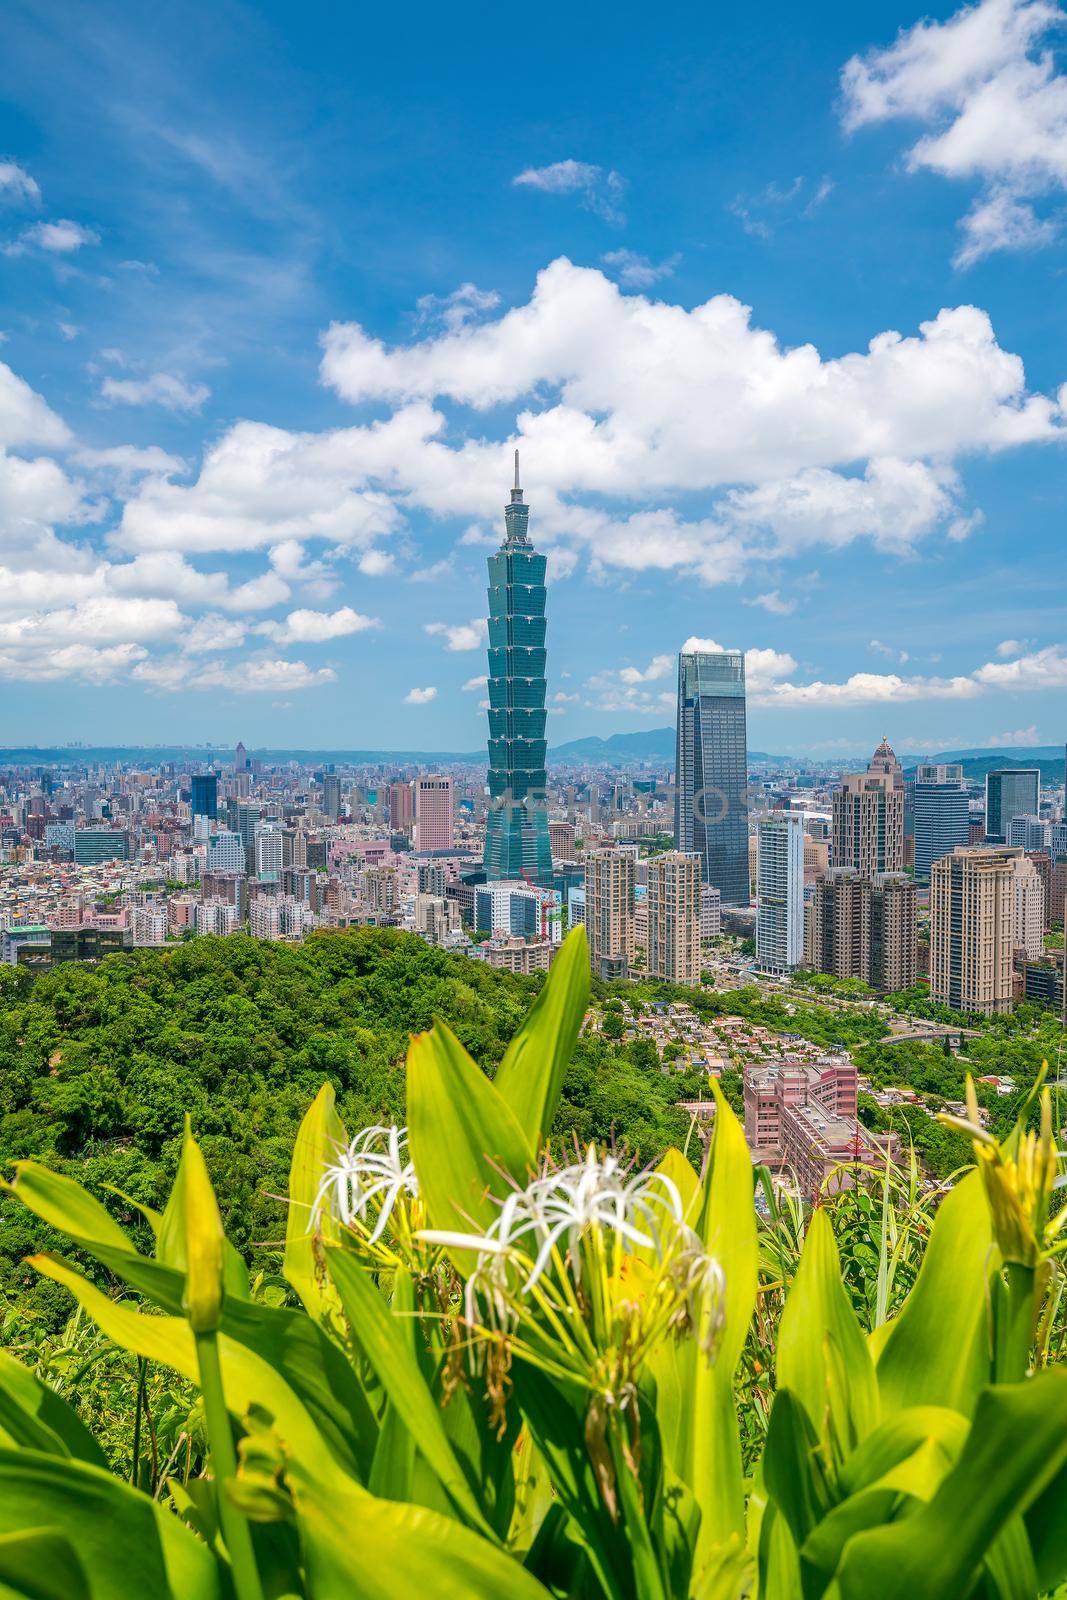 Skyline of downtown Taipei in Taiwan by f11photo